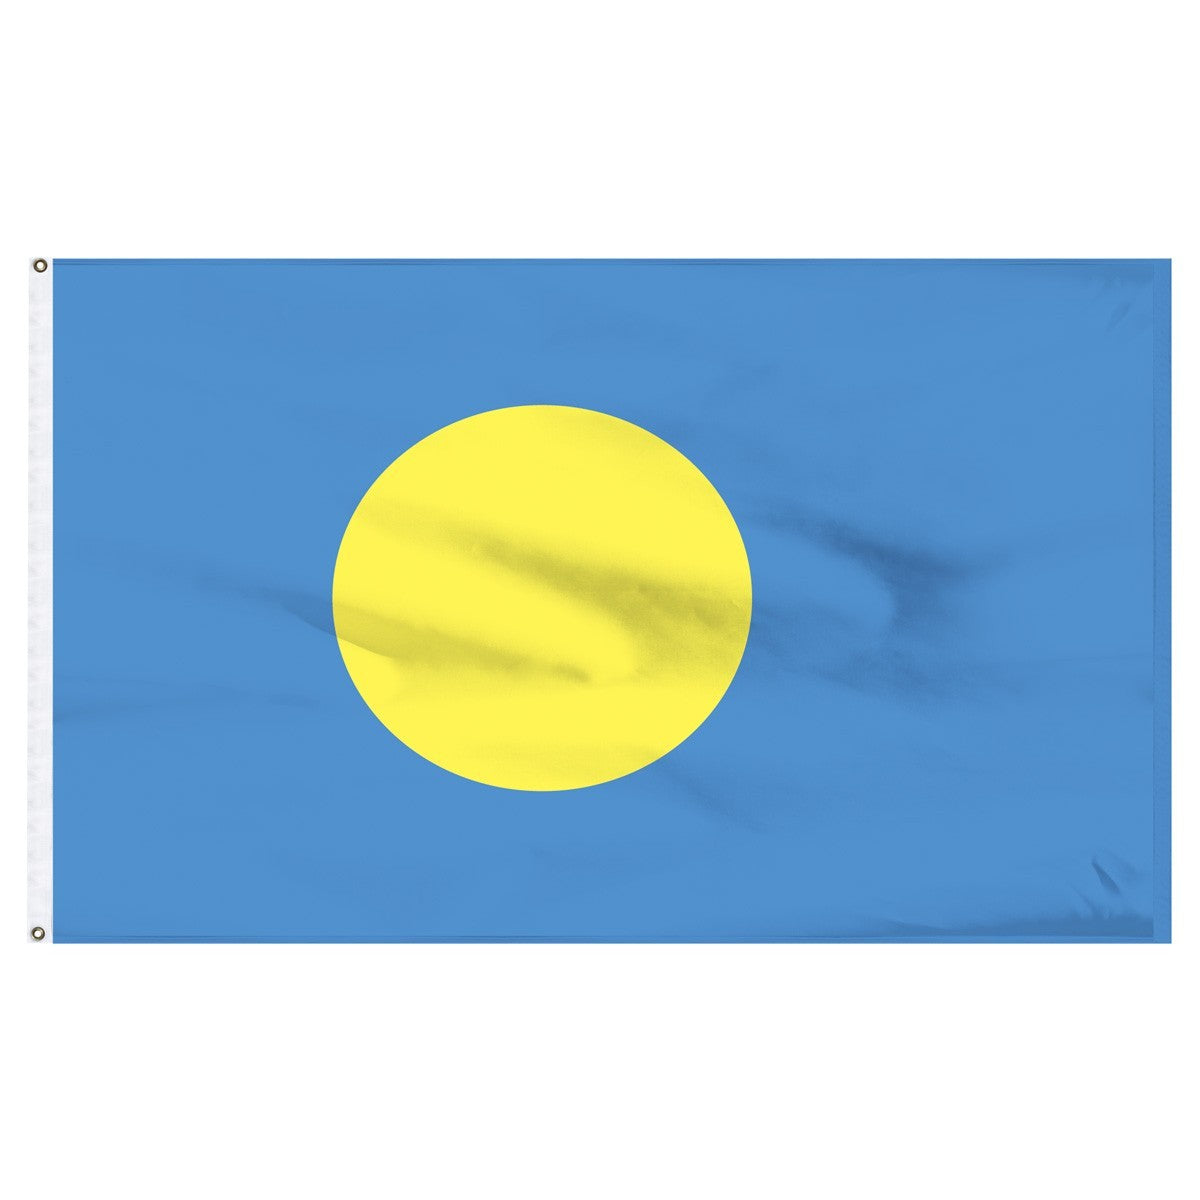 Palau school flags for sale